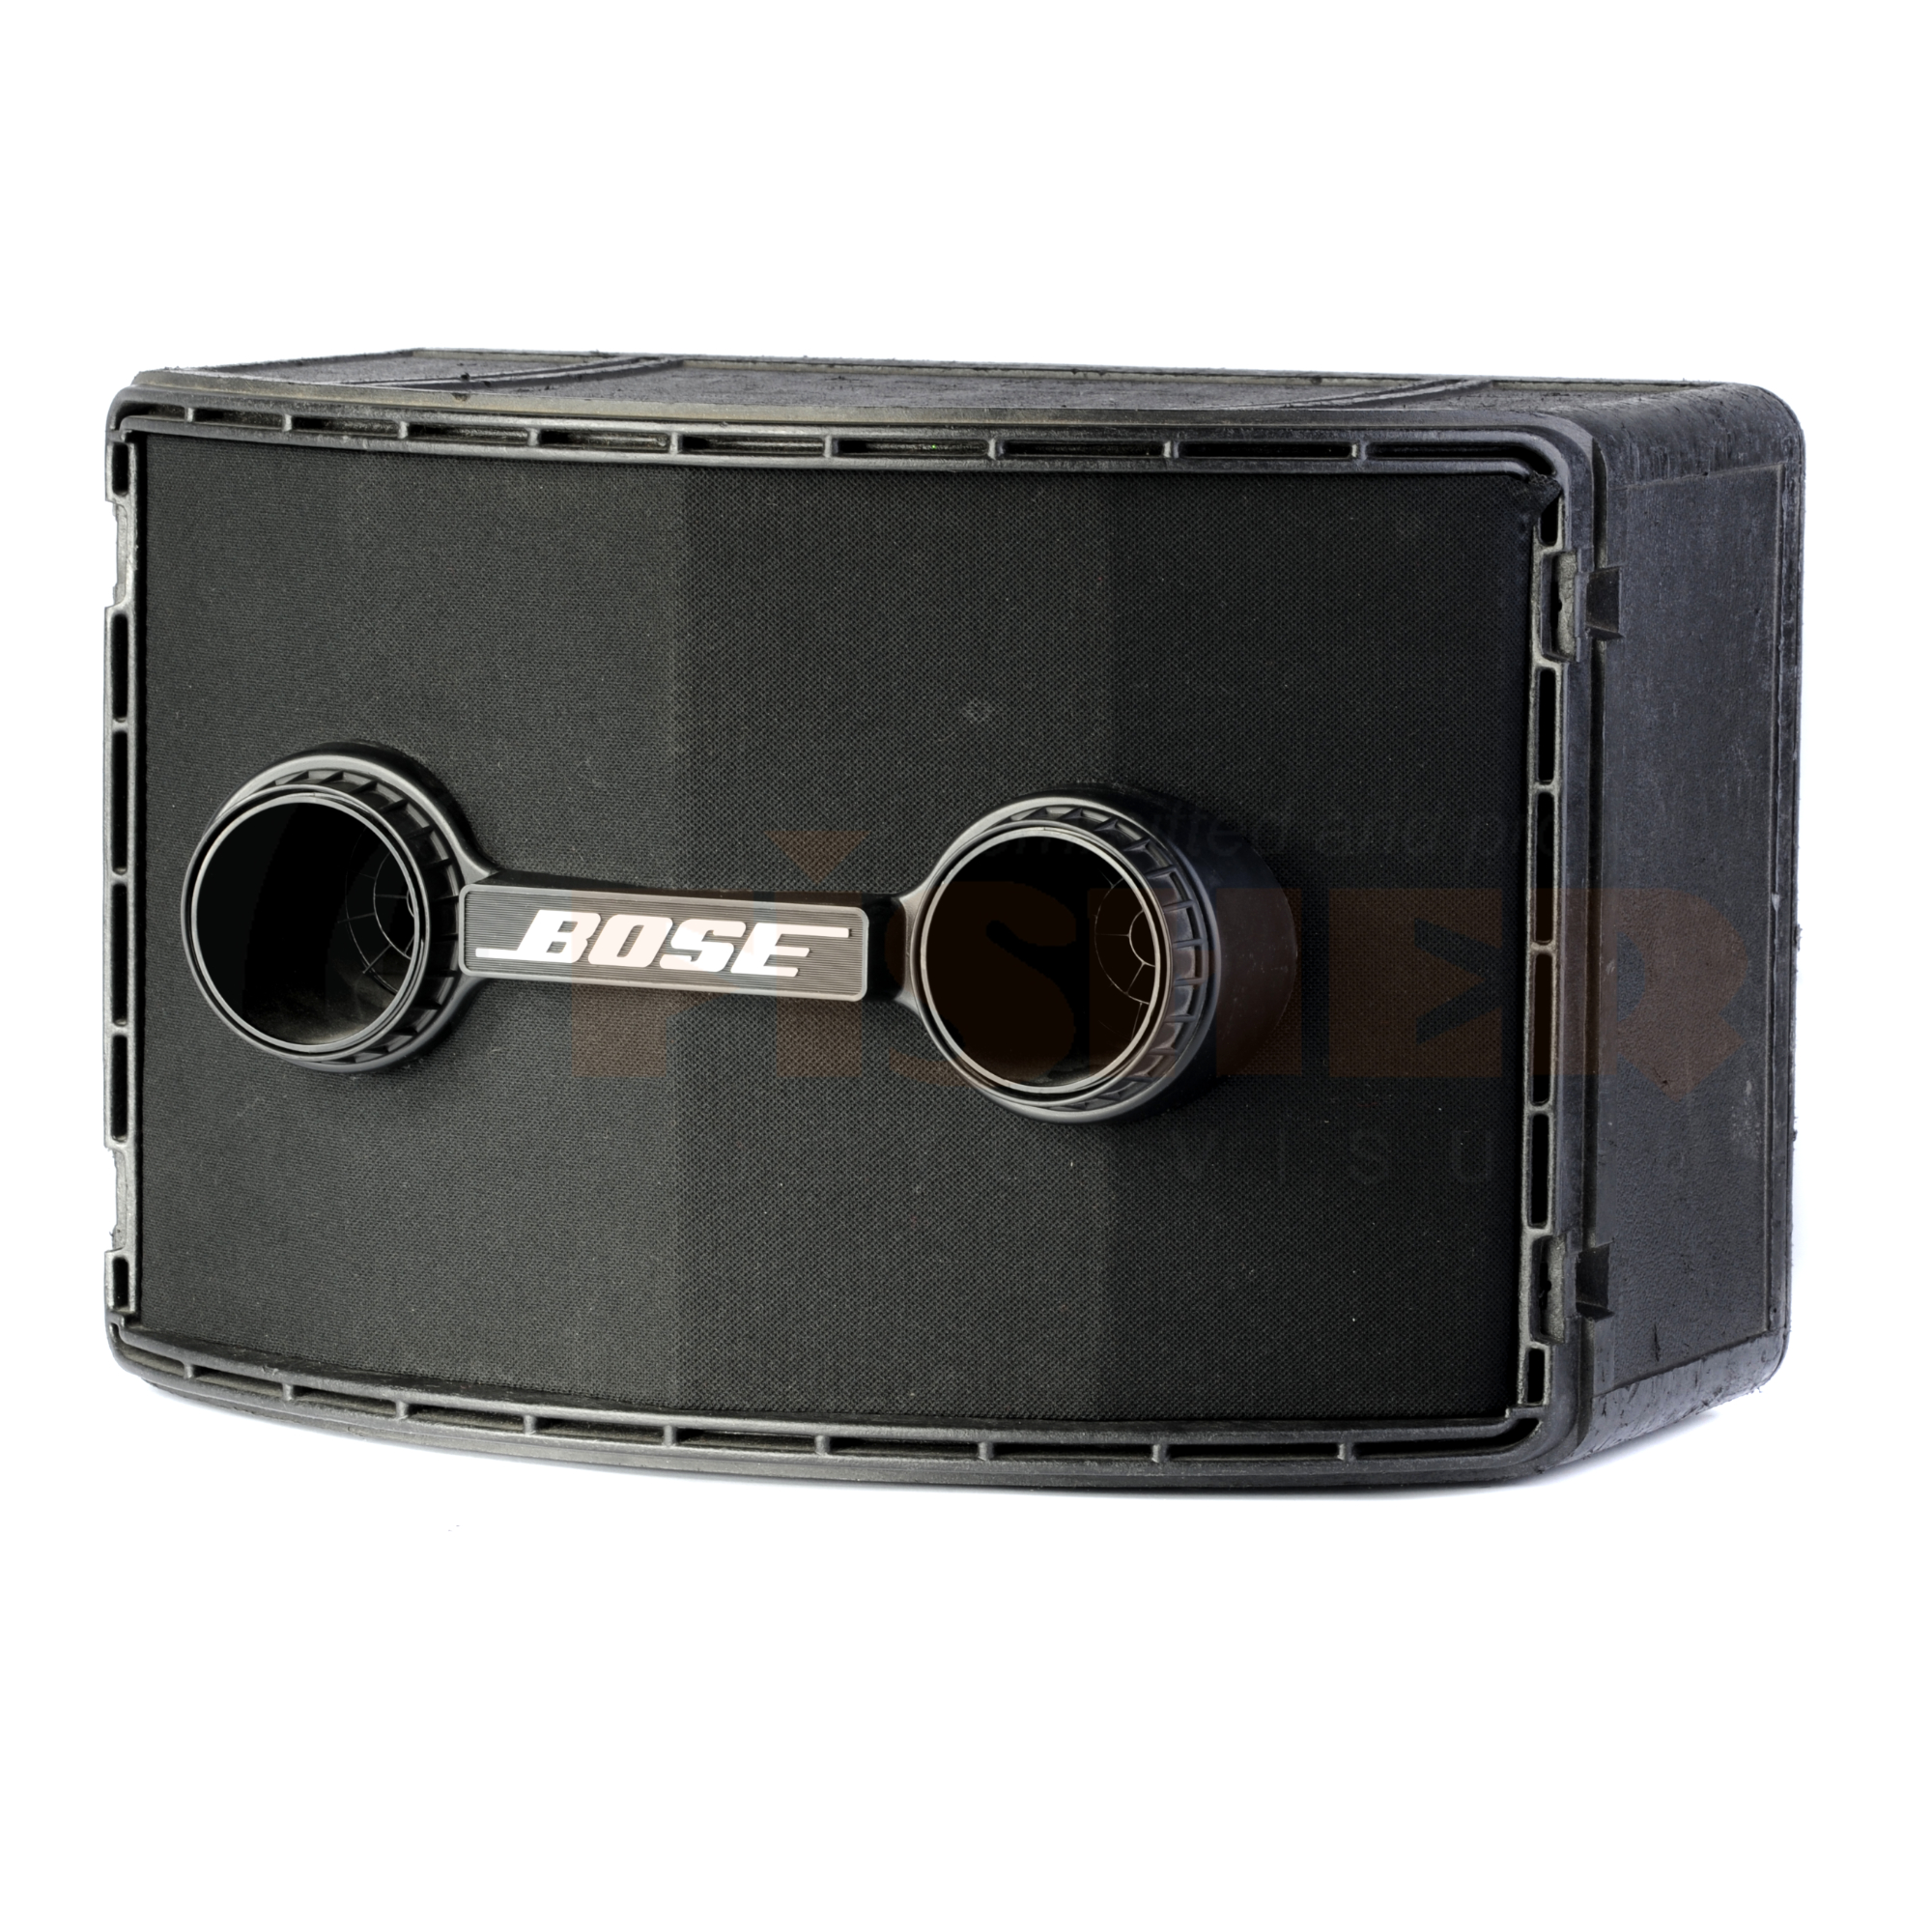 Enceinte Bose 802 Série II – By dreamX